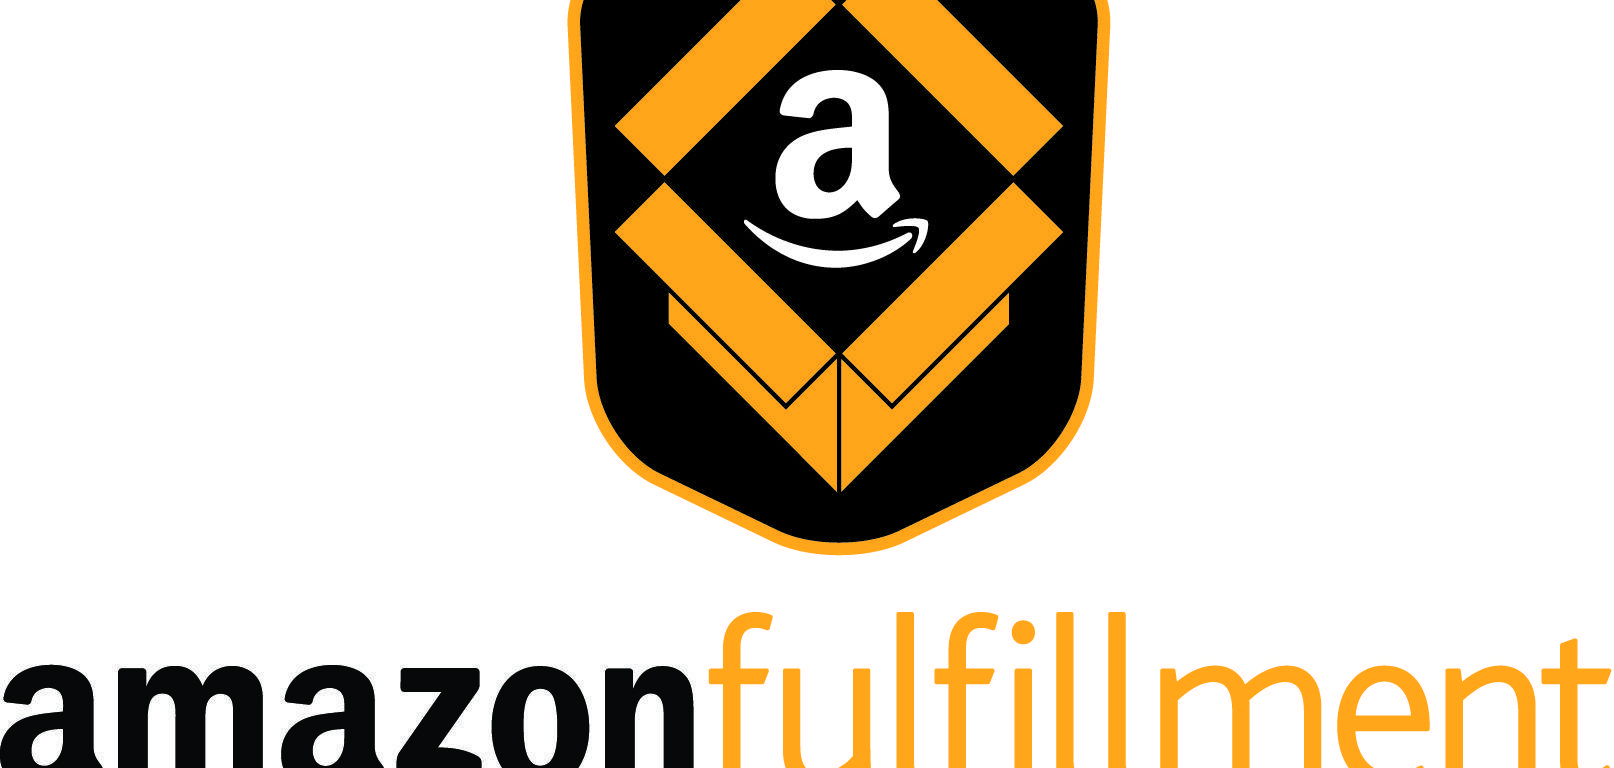 FBA Amazon Logo - Starting An Amazon FBA Business